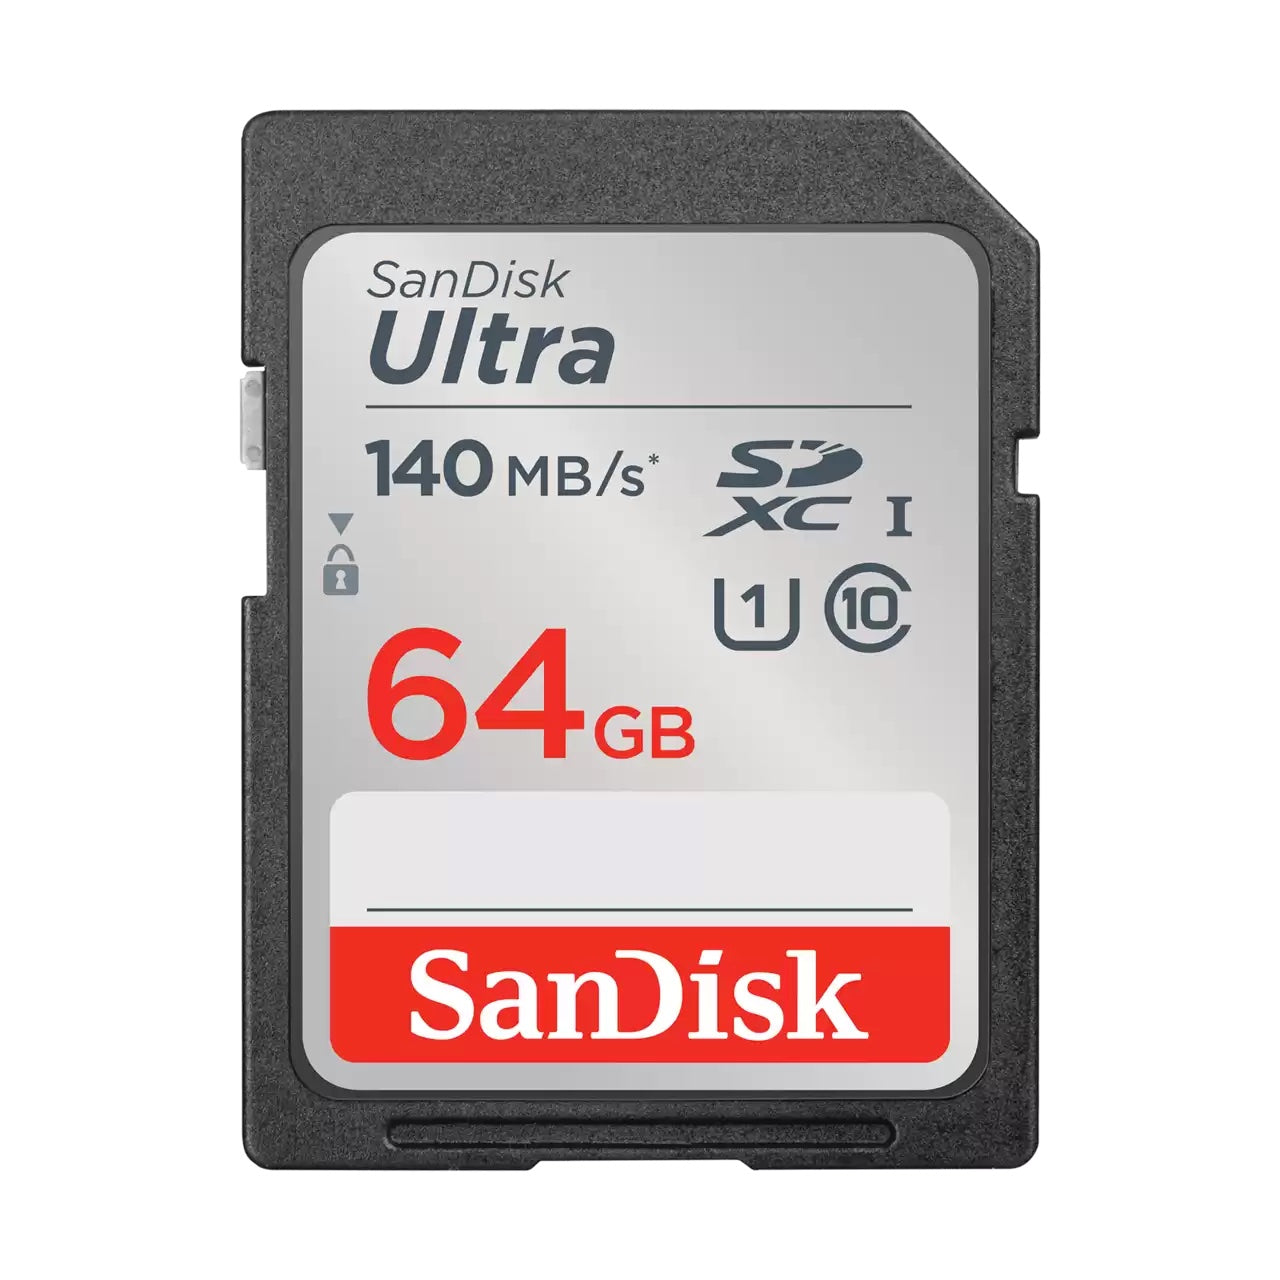 Sandisk 64Gb SDXC Ultra 140MB/s Memory Card Sandisk SD Card